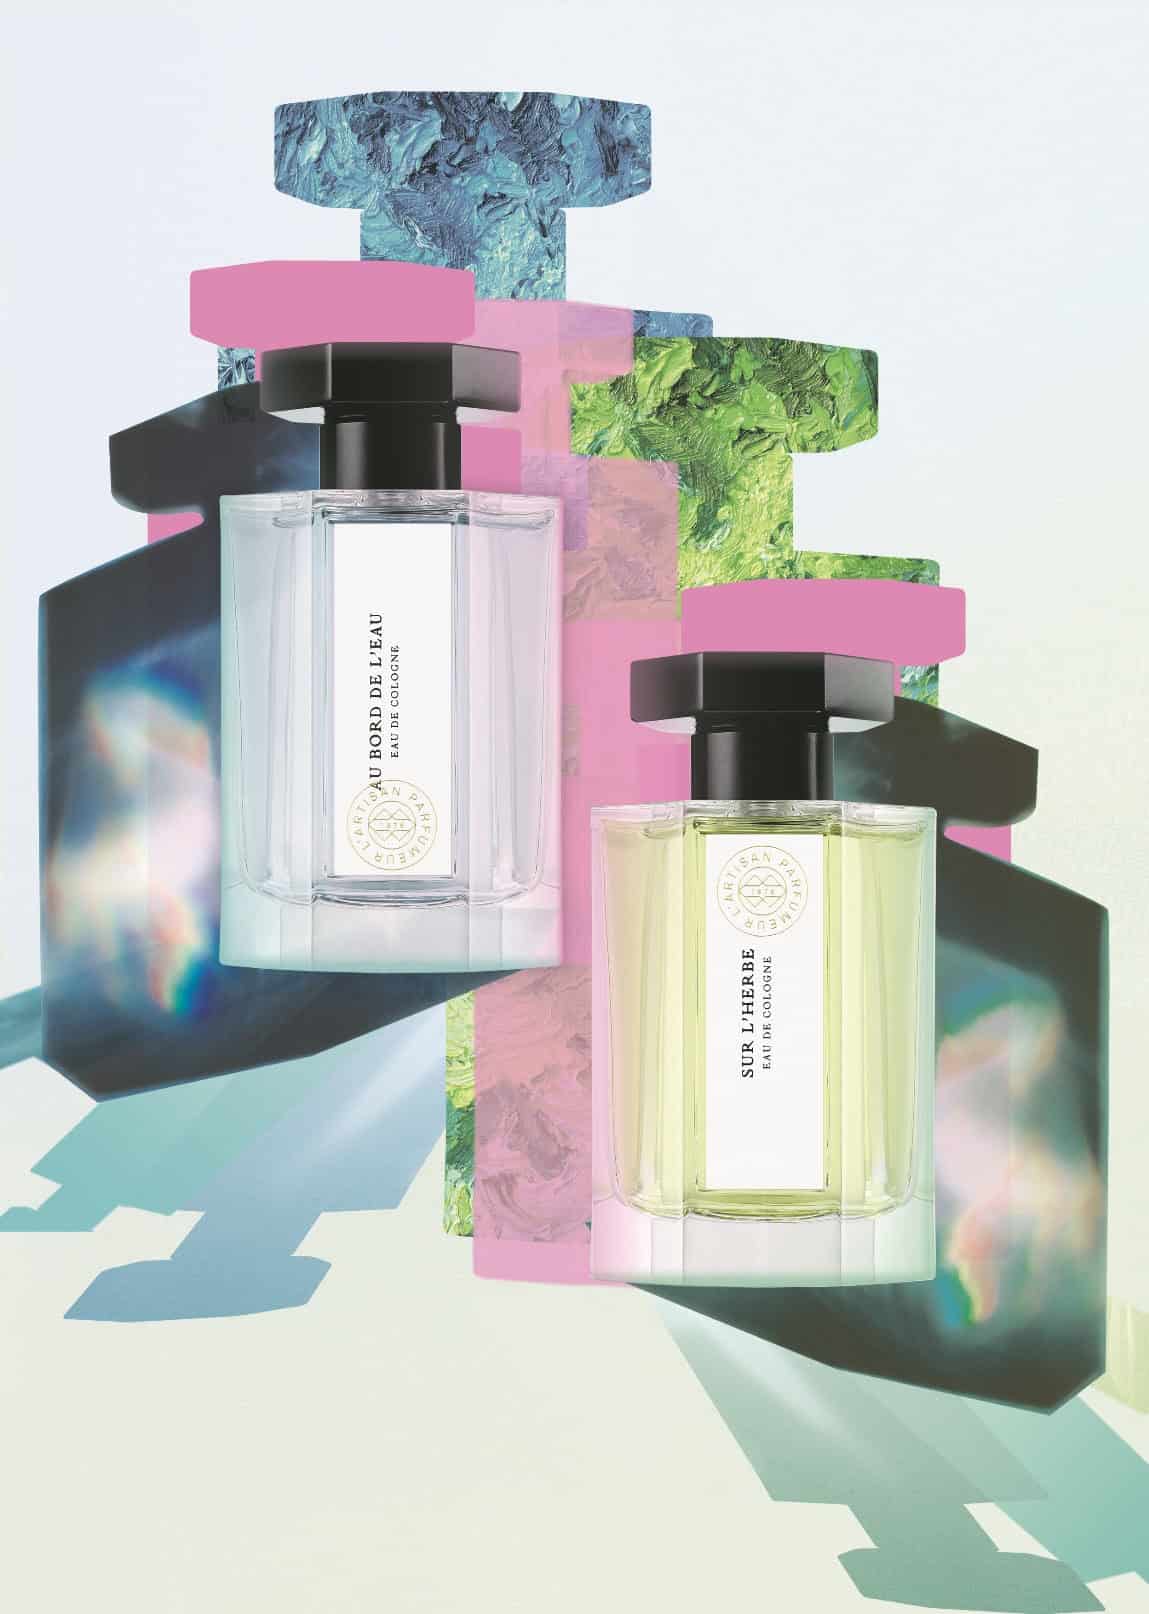 L'Artisan Parfumeur lancia due nuove fragranze ispirate a celebri quadri di Monet